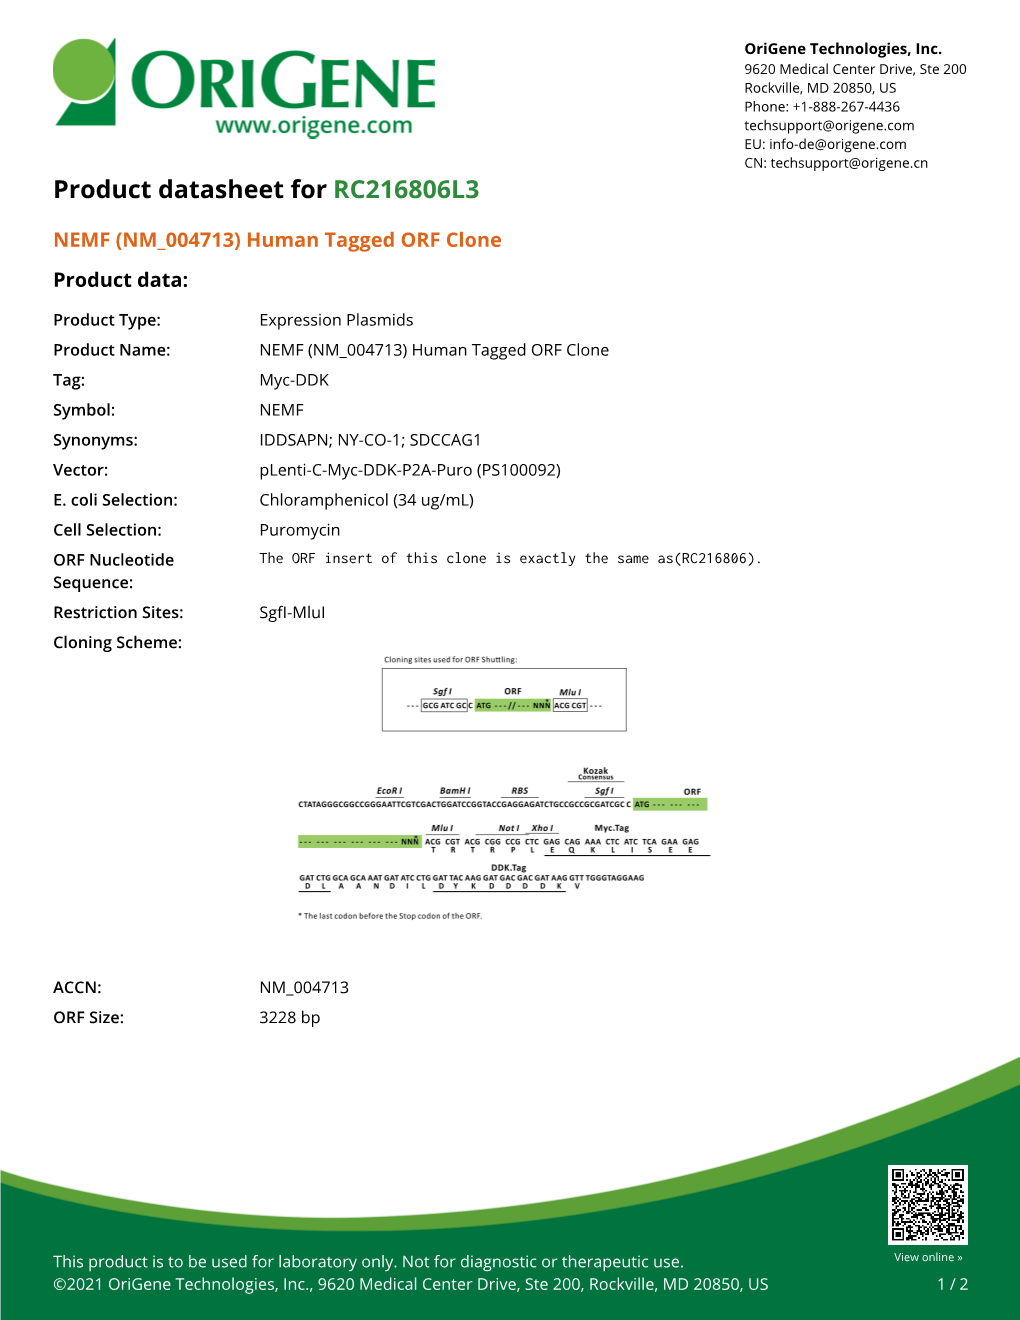 NEMF (NM 004713) Human Tagged ORF Clone Product Data